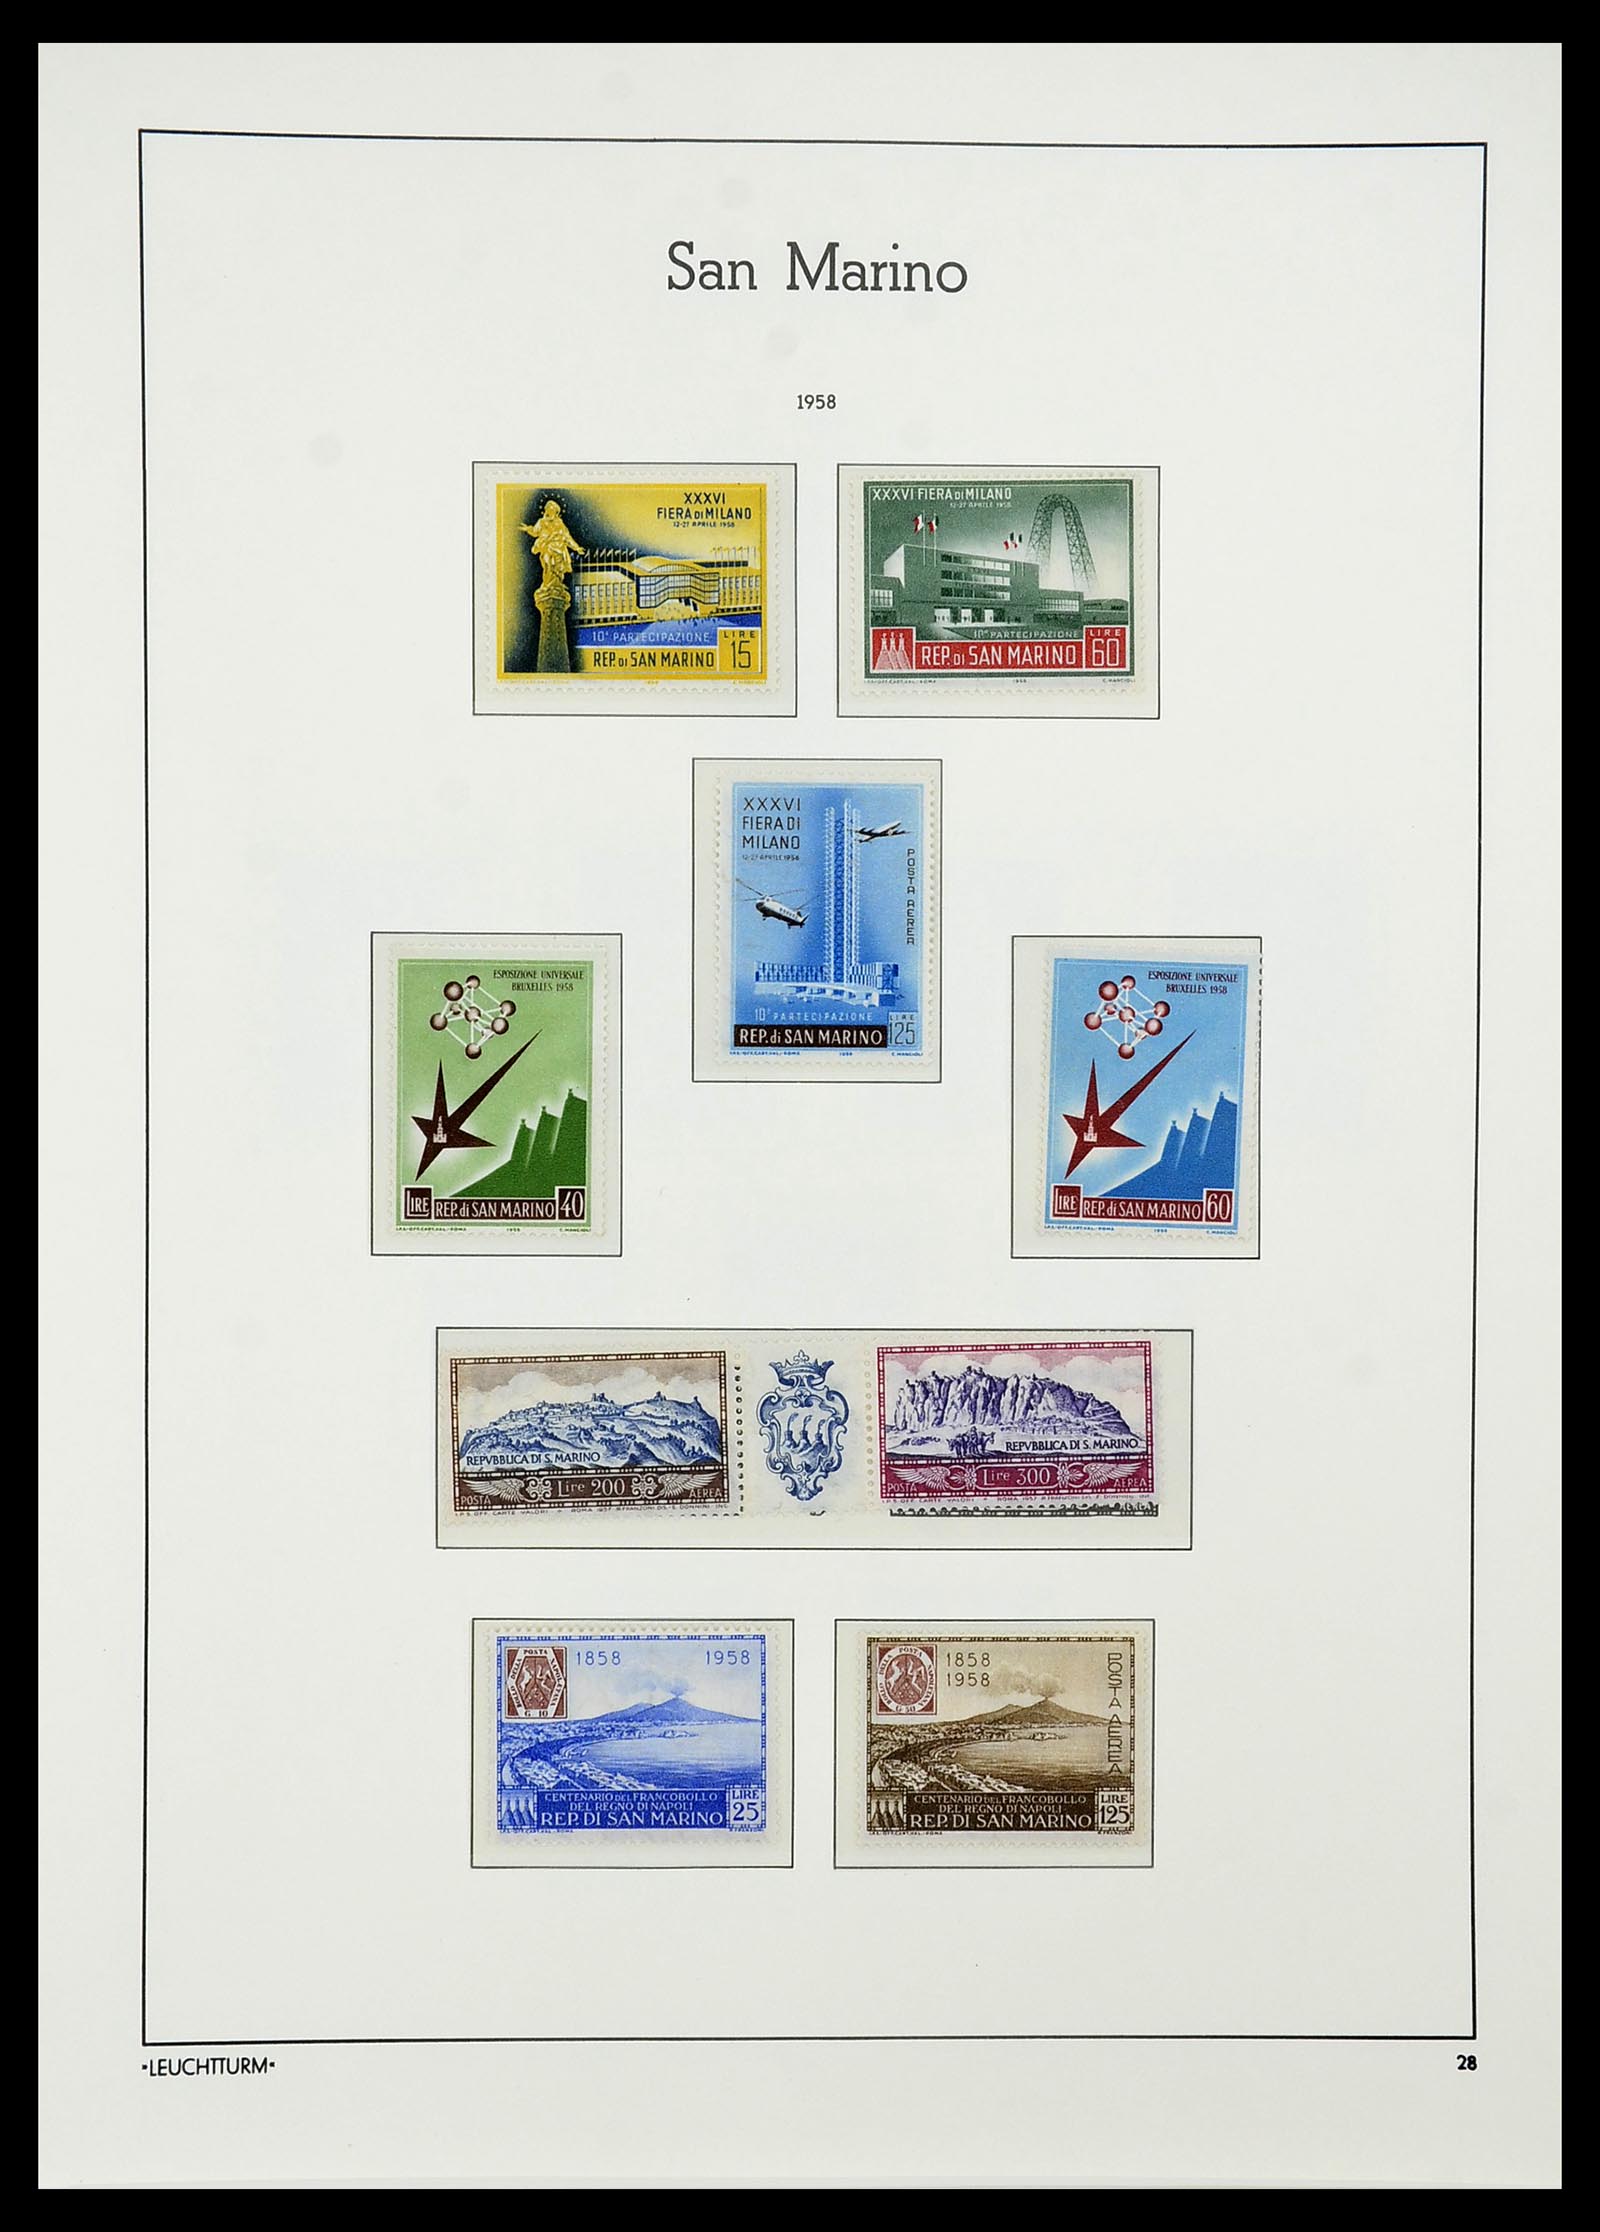 34243 063 - Stamp collection 34243 San Marino 1877-2008.